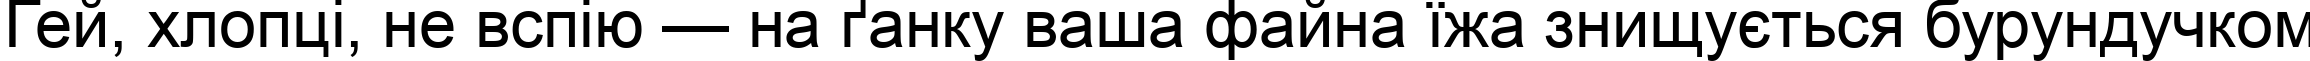 Пример написания шрифтом Arial текста на украинском